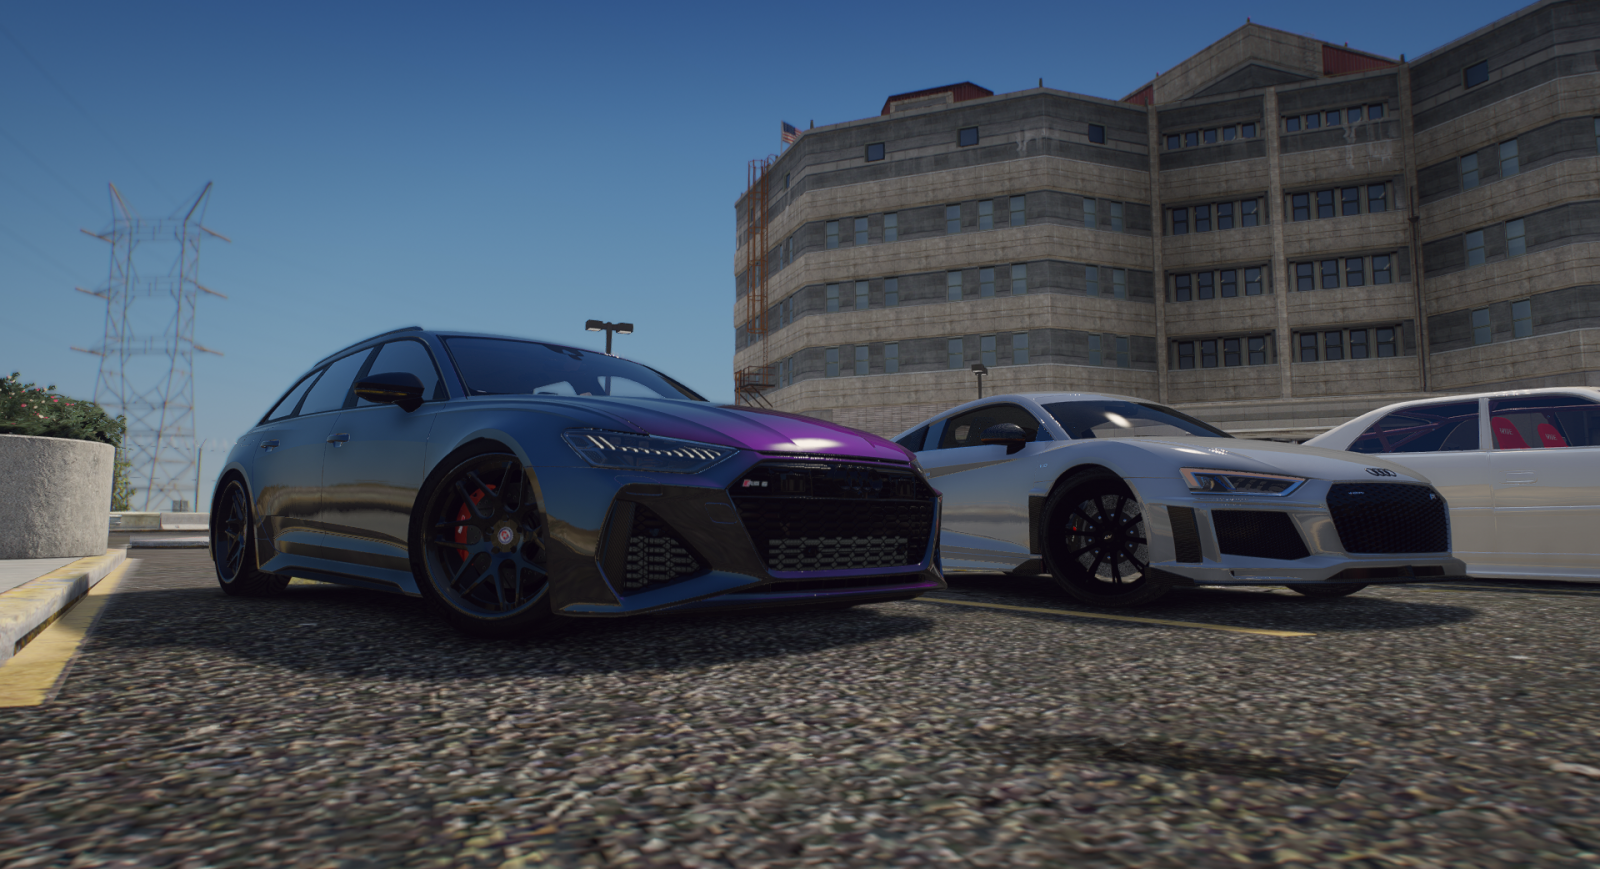 Audi duo